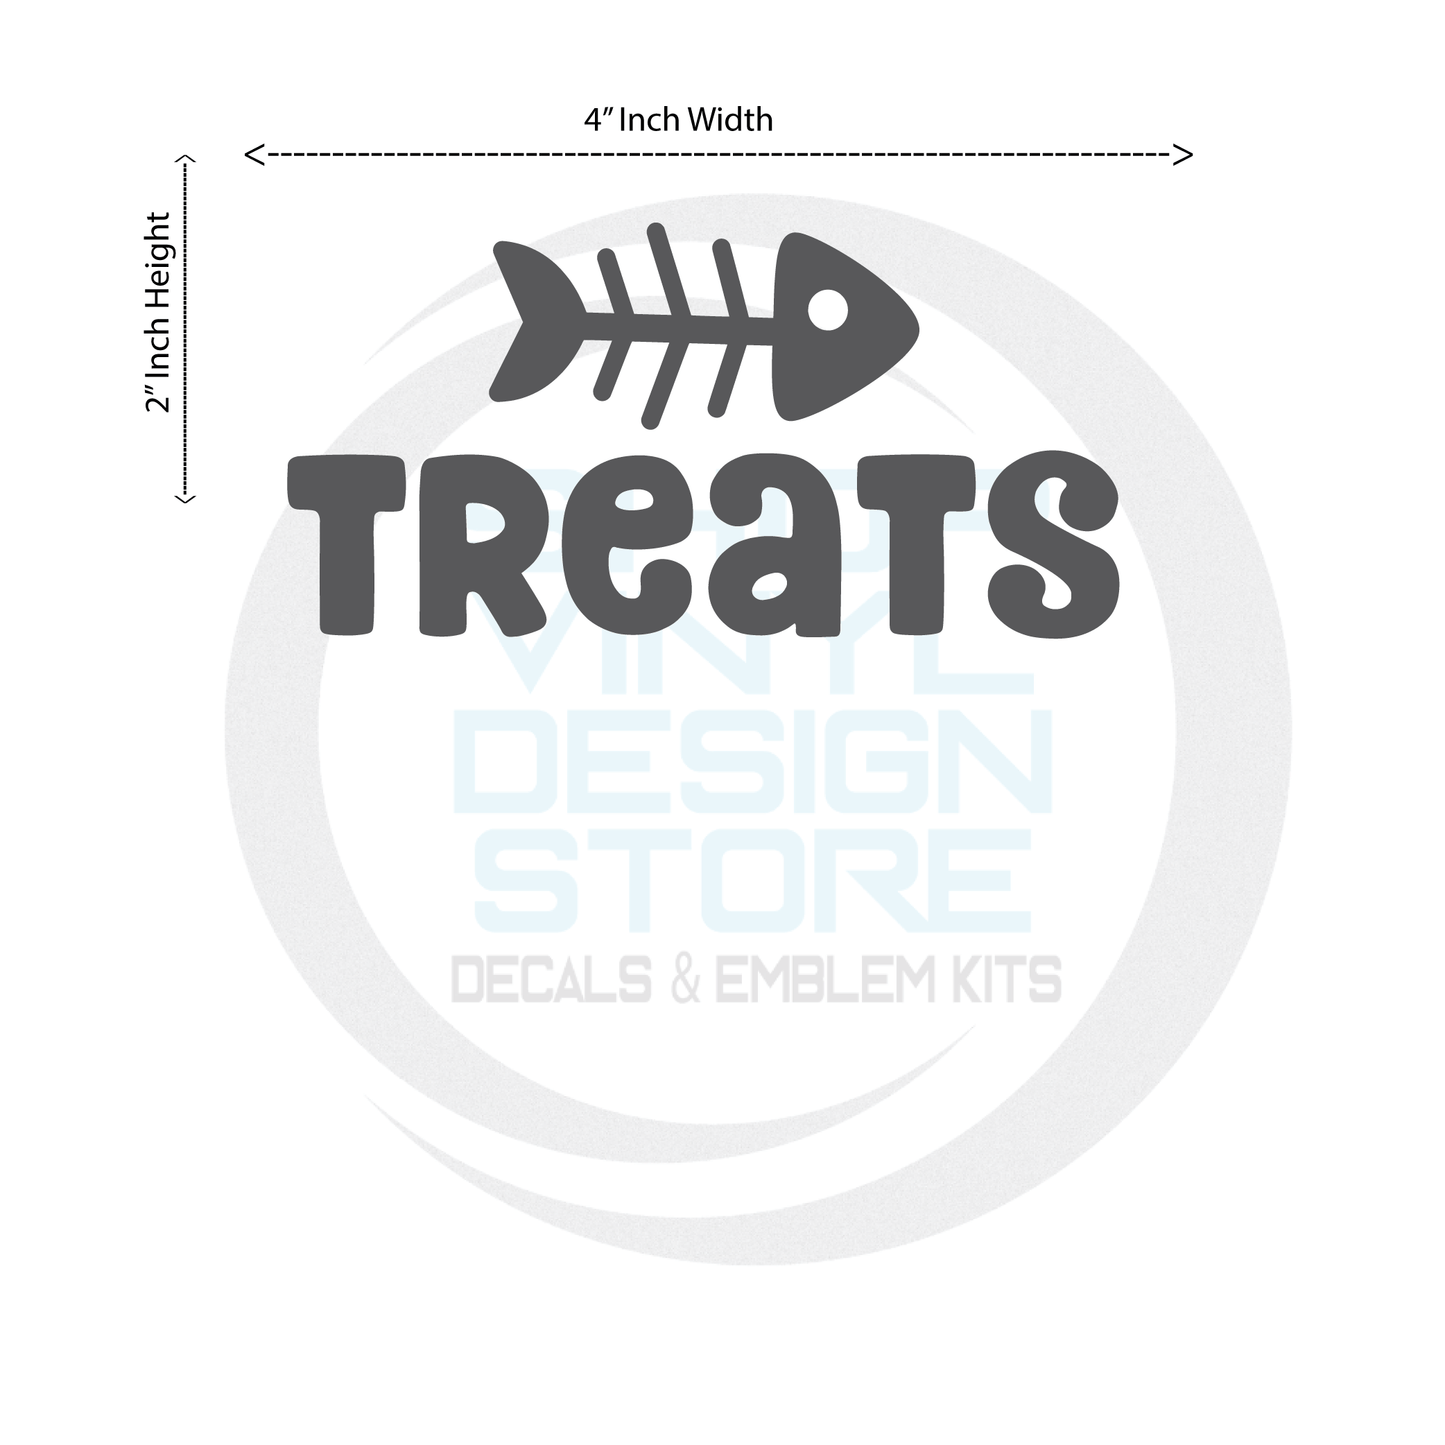 ShopVinylDesignStore.com Treats with Fish Bone Wide 4"W x 2"H Shop Vinyl Design decals stickers